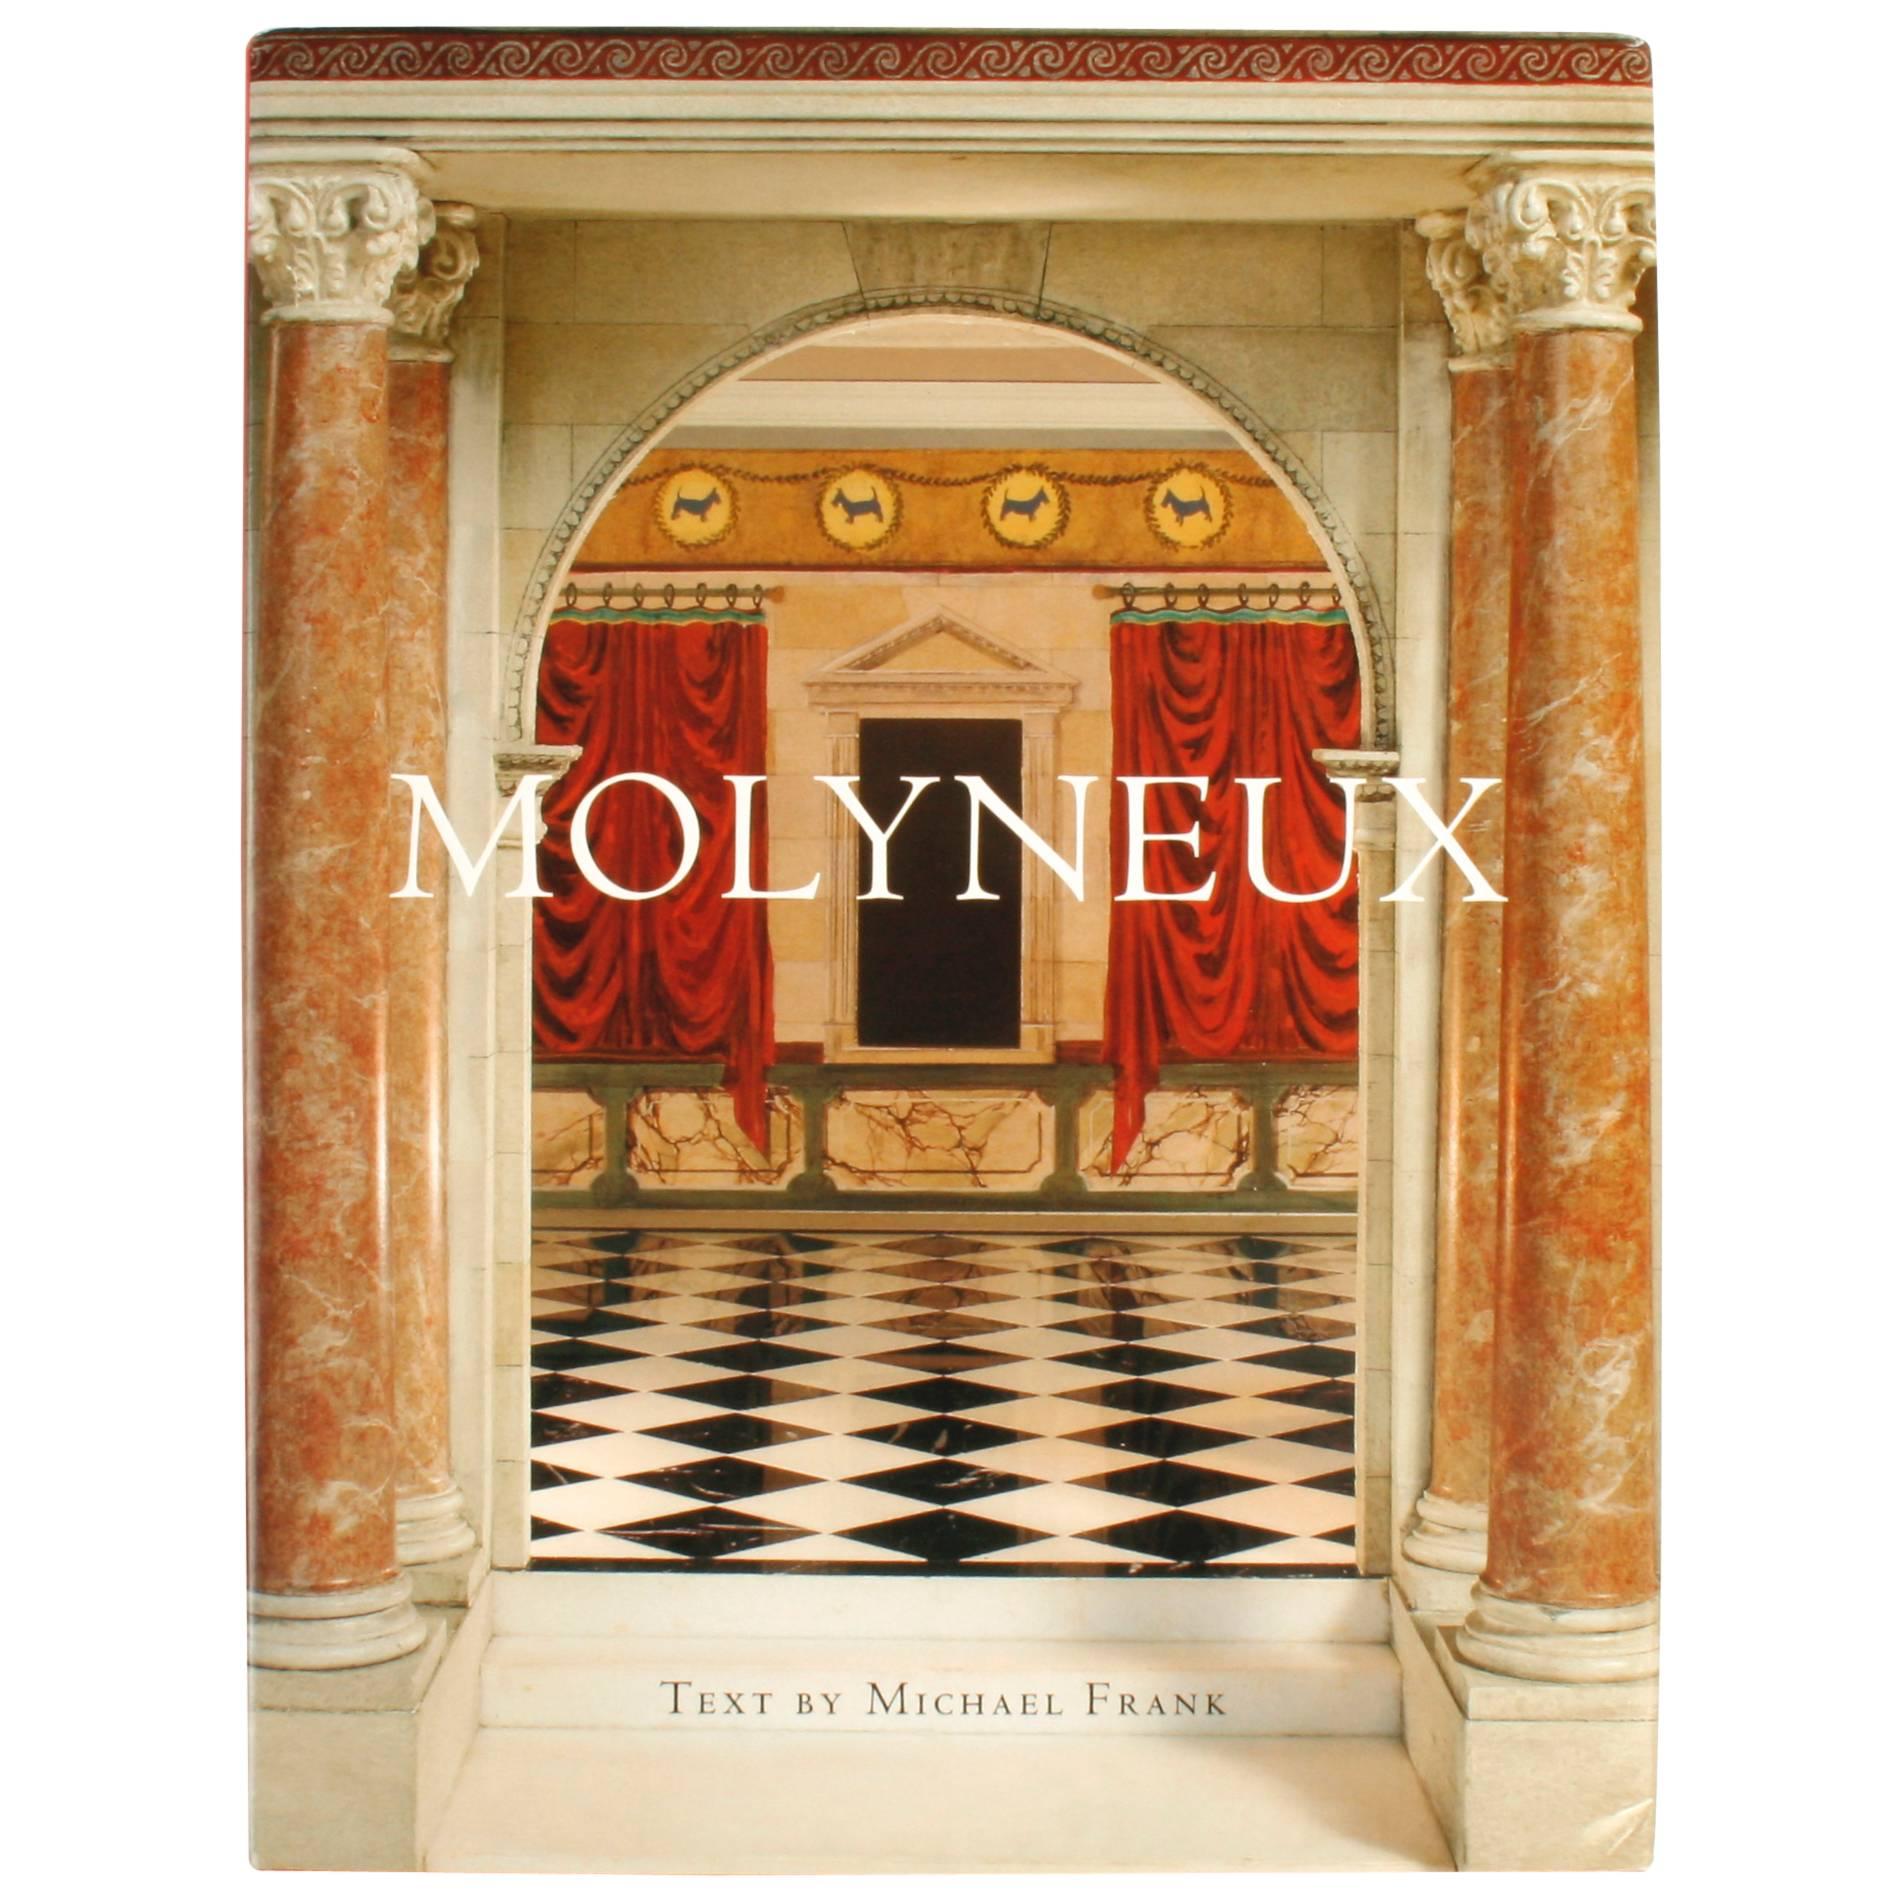 Molyneux by Michael Frank